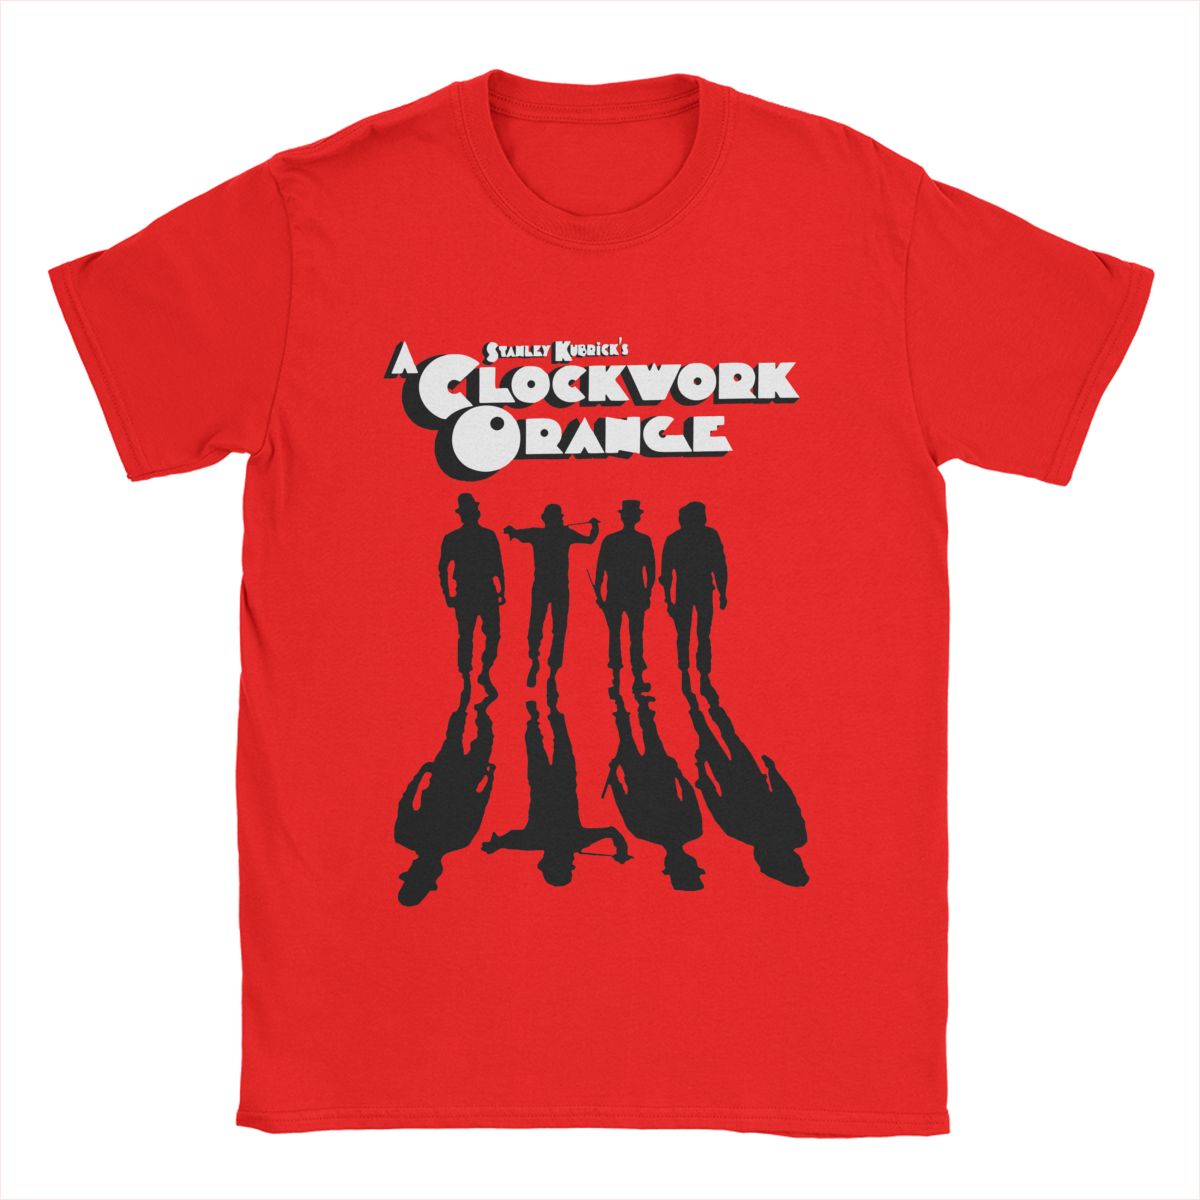 A Clockwork Orange - 100% Cotton T-Shirt - Stanley Kubrick - Sci-Fi Fan Garment-Red-S-